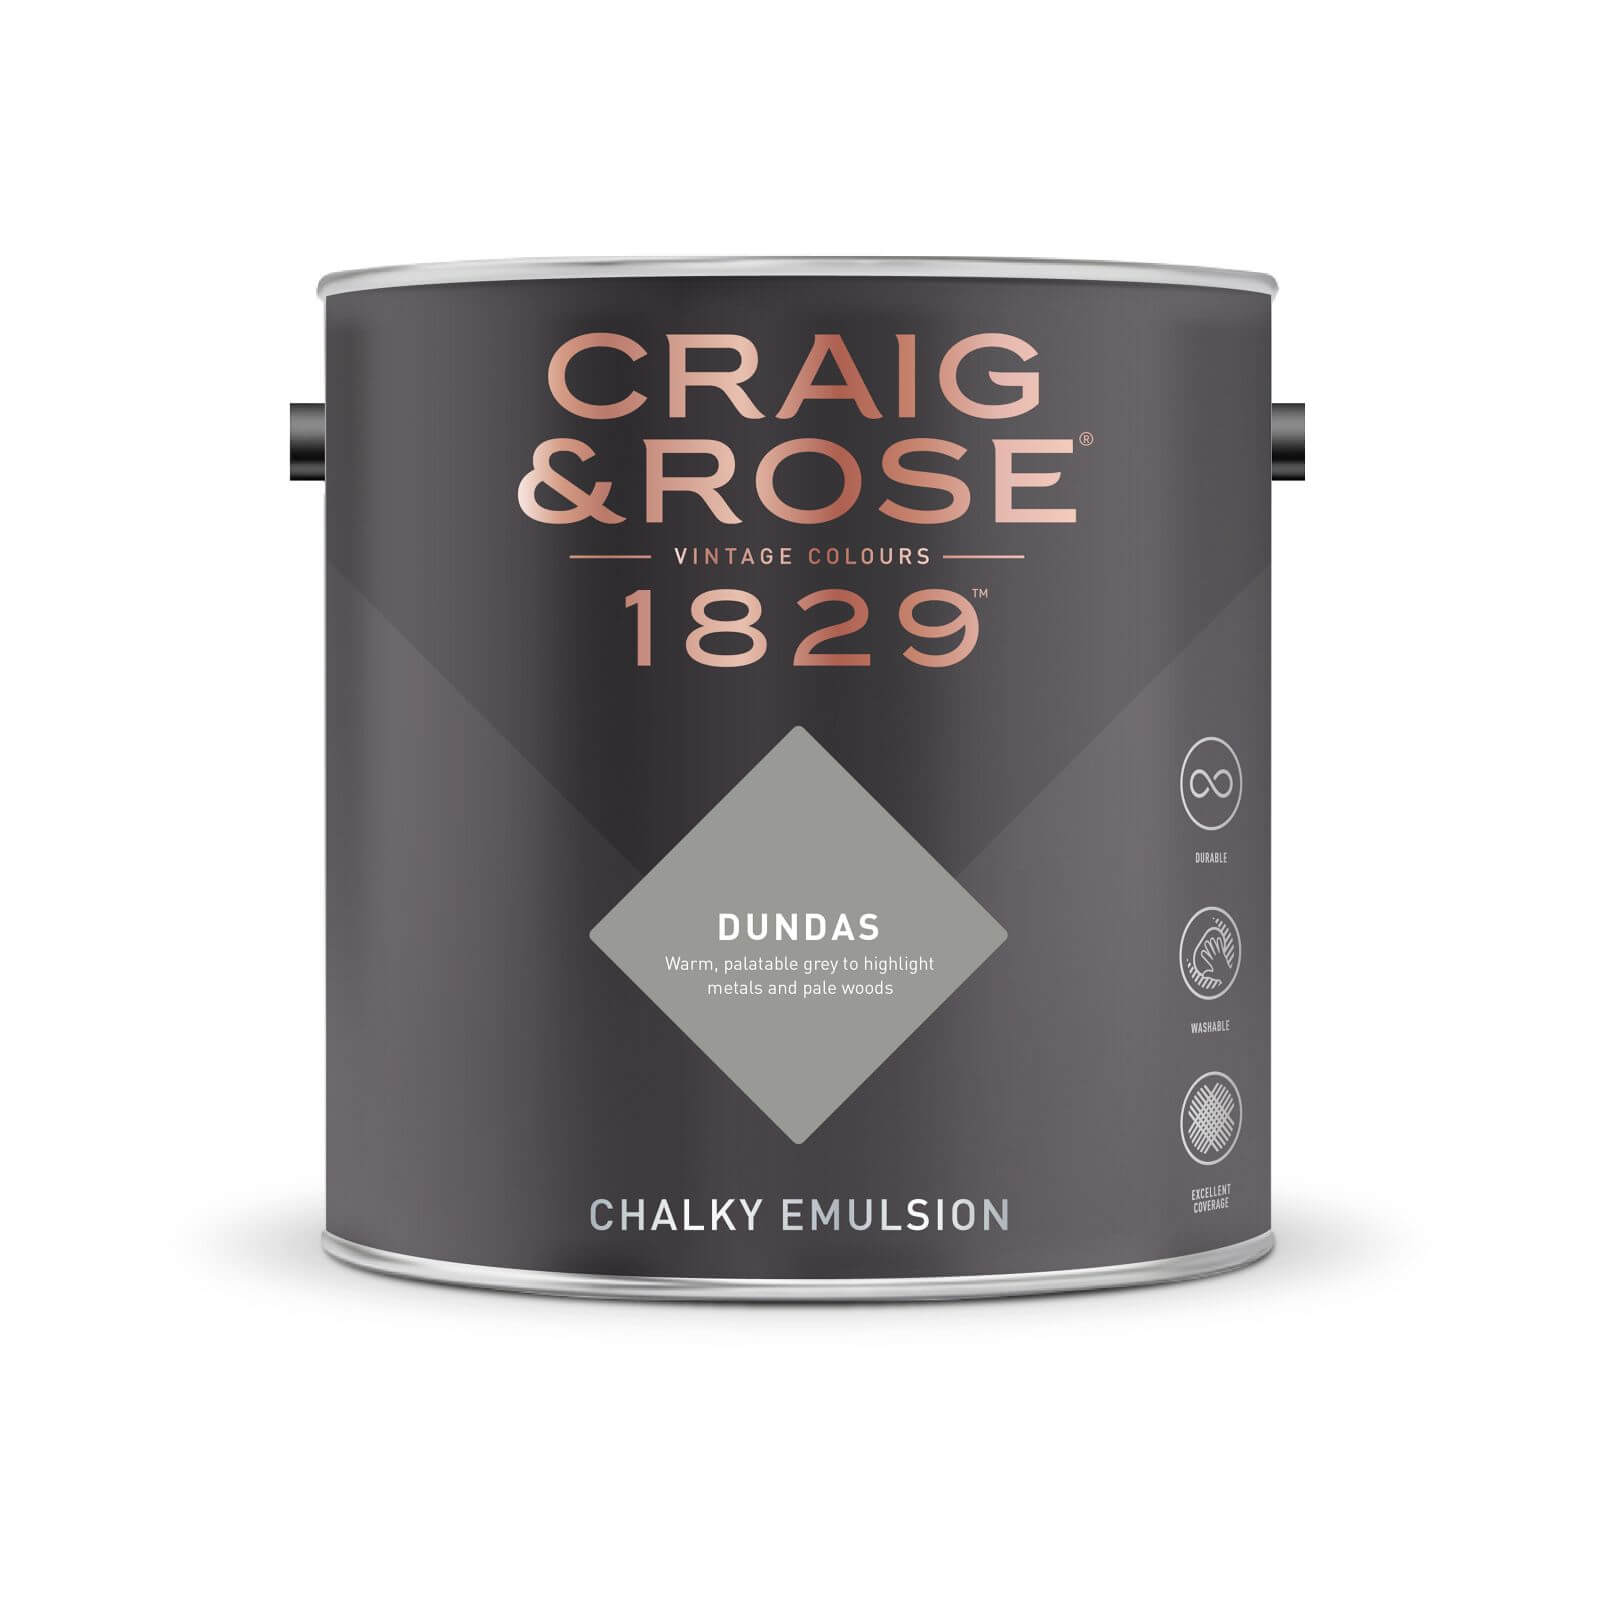 Craig & Rose 1829 Chalky Emulsion Paint Dundas - Tester 50ml